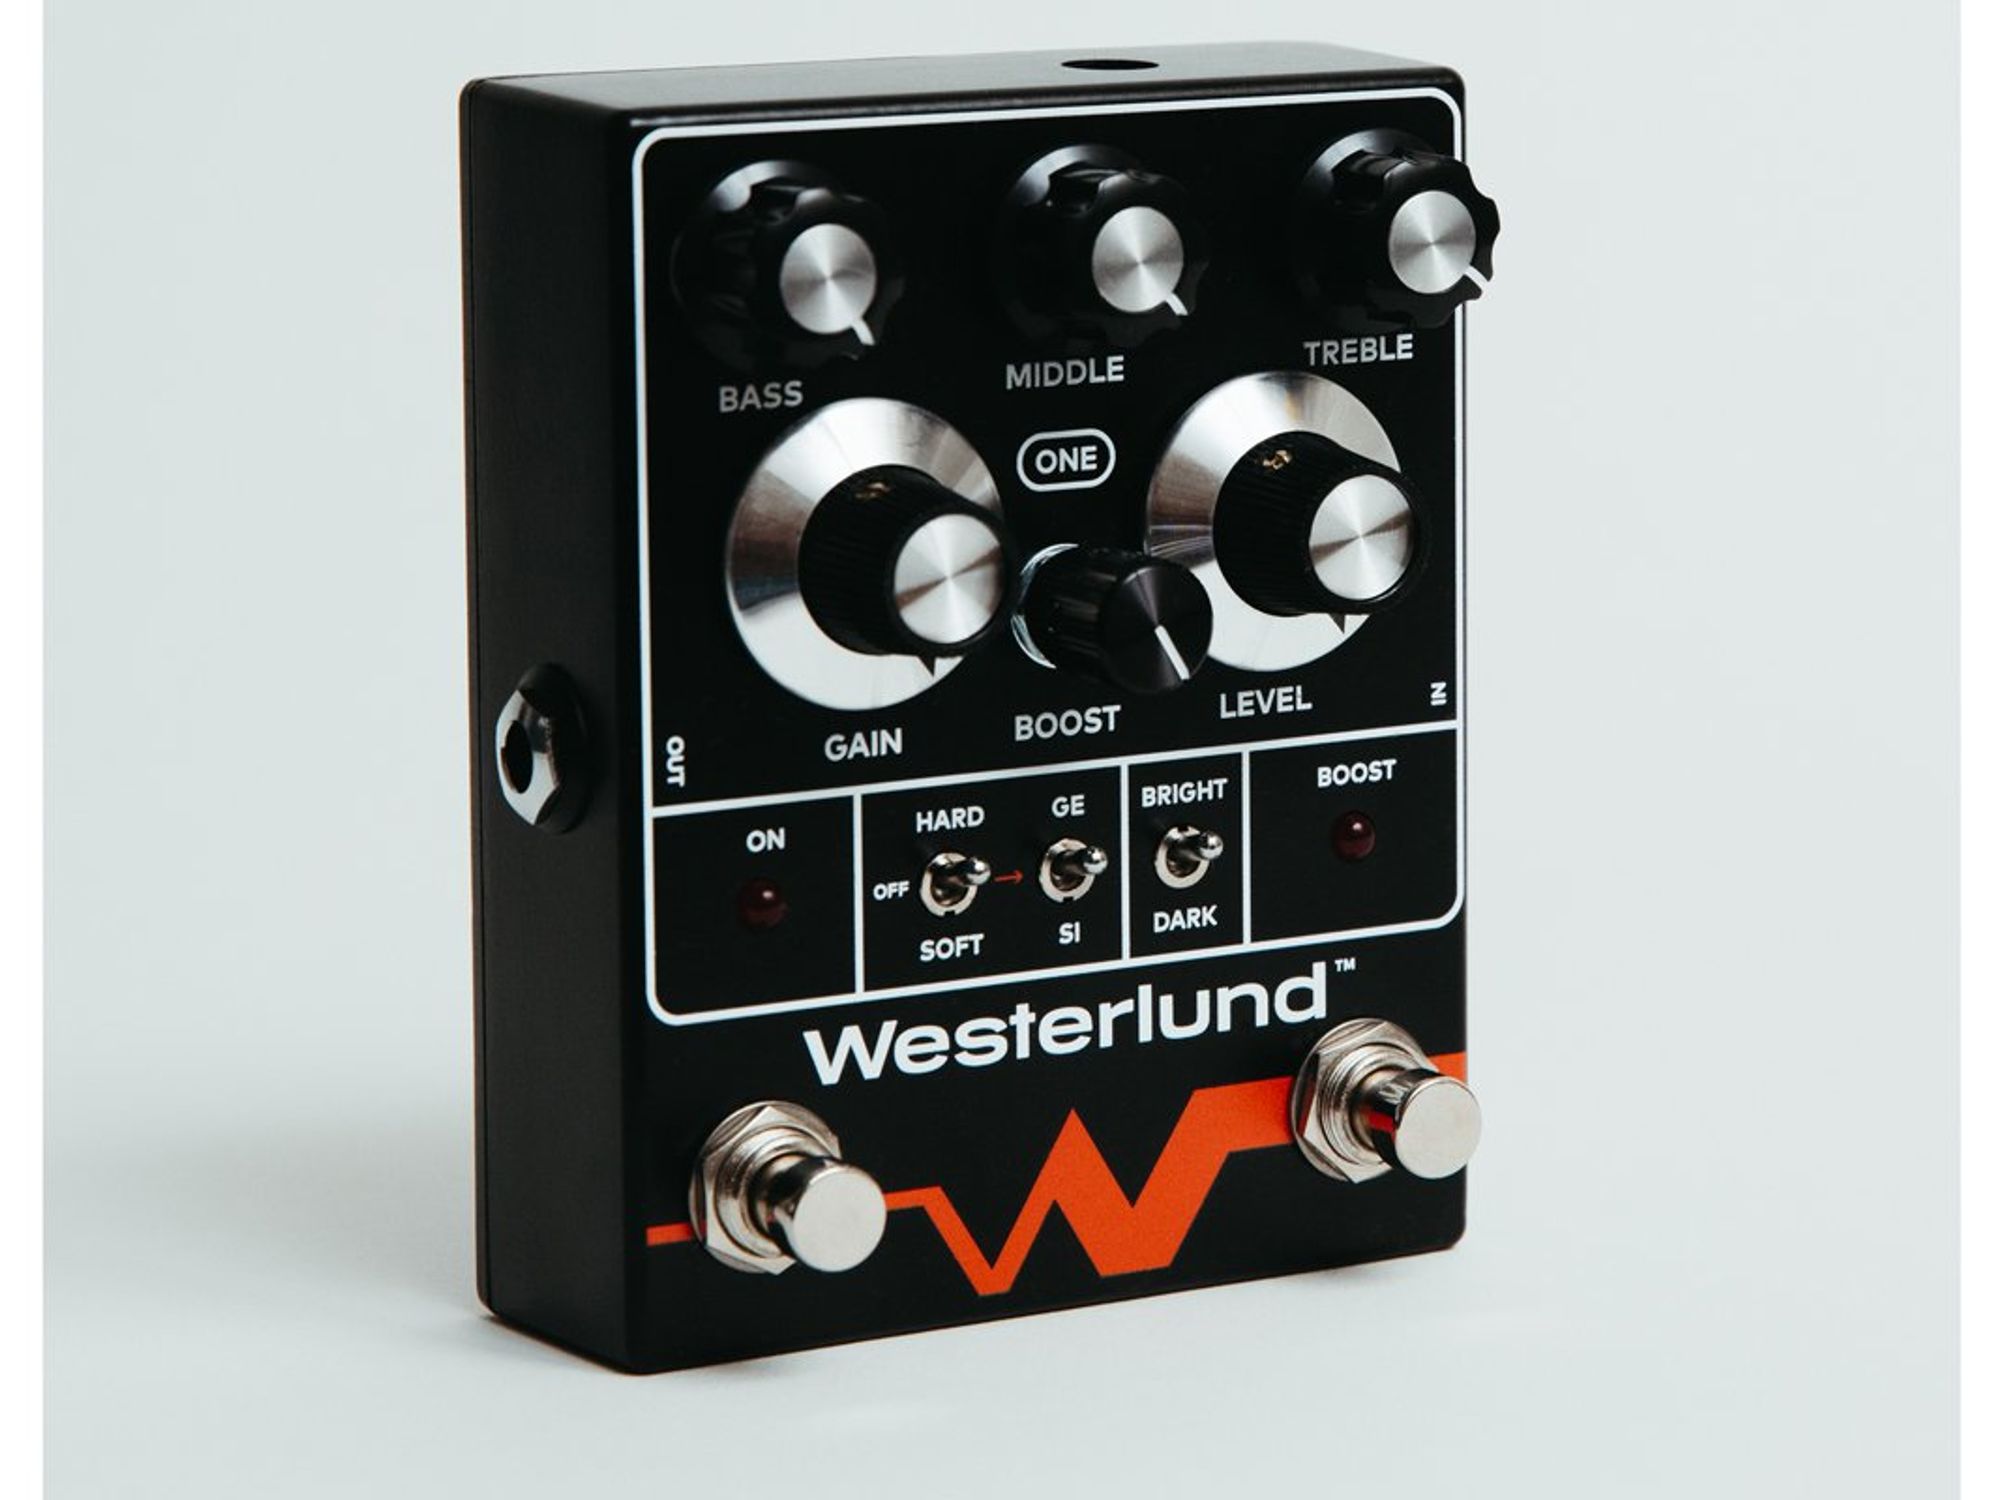 Westerlund Audio Announces the Westerlund ONE